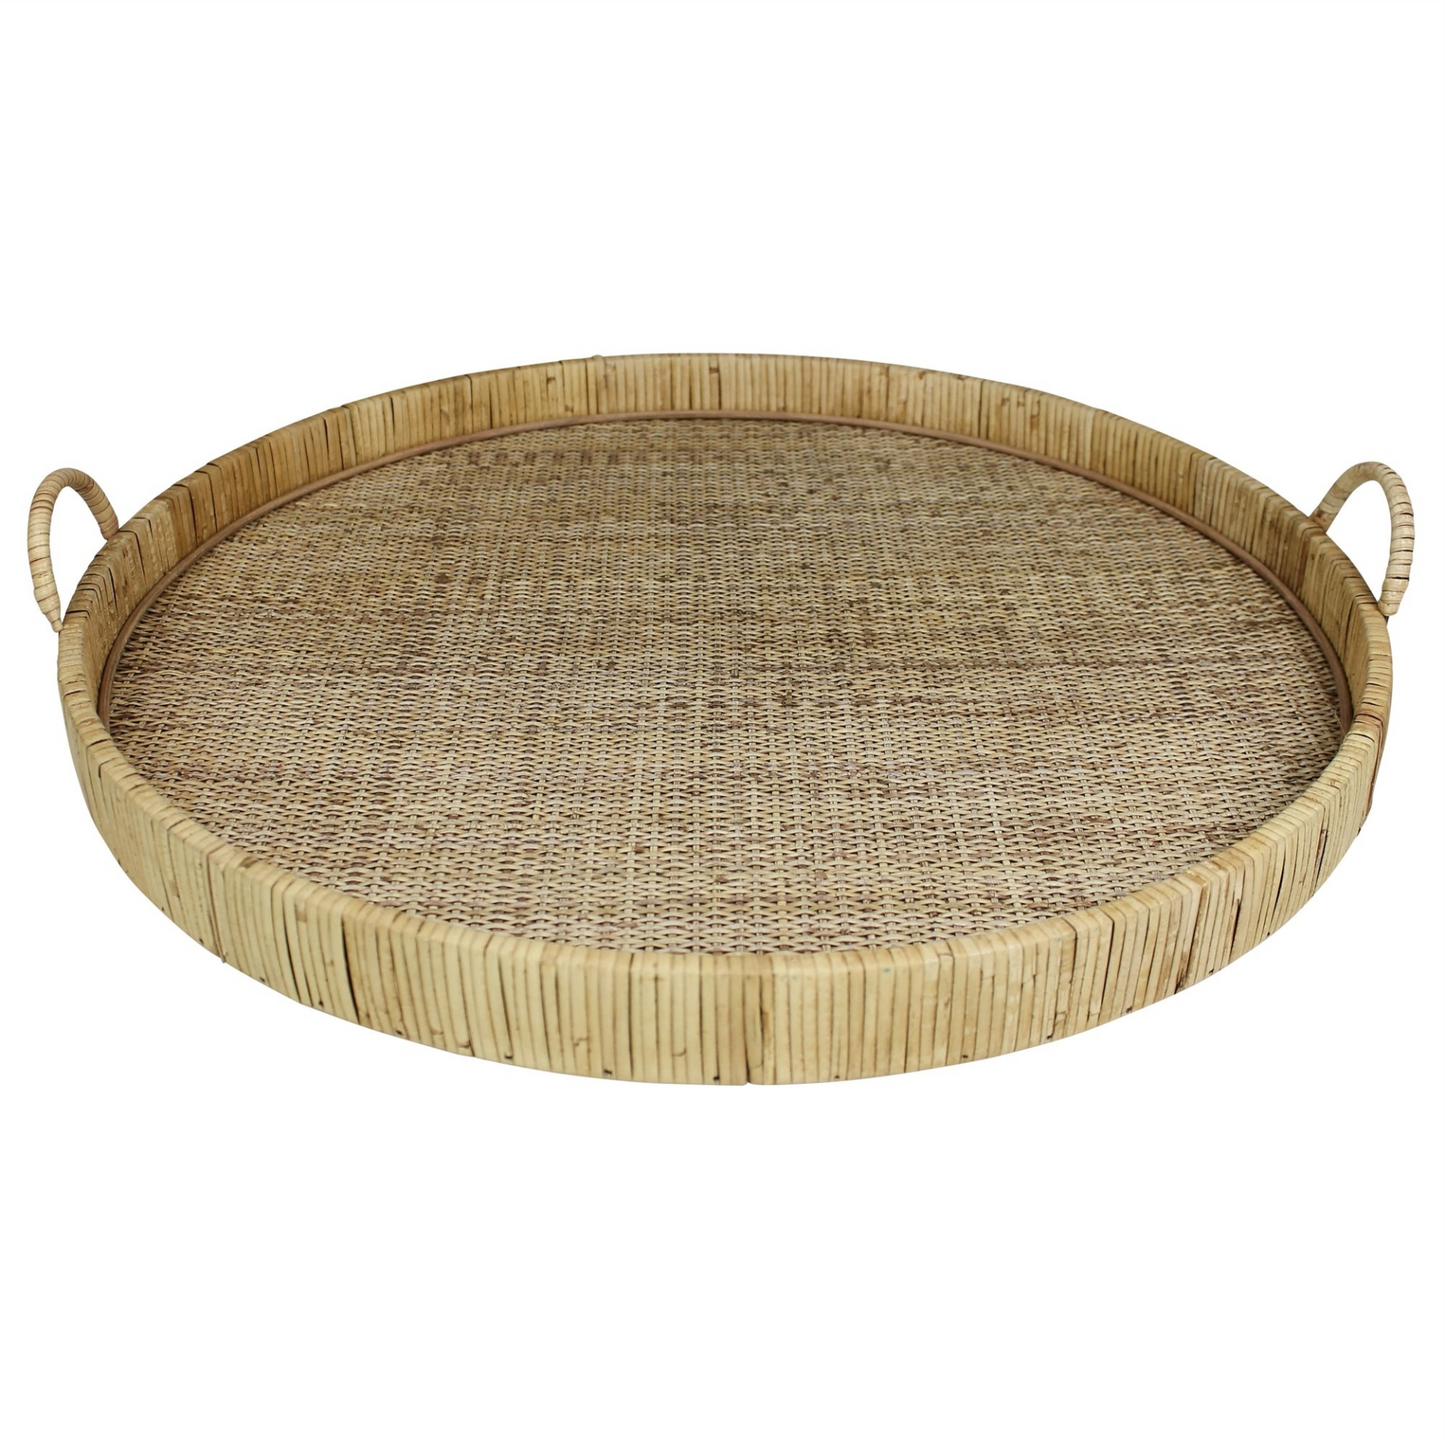 "Jumbo Bamboo Round Tray"